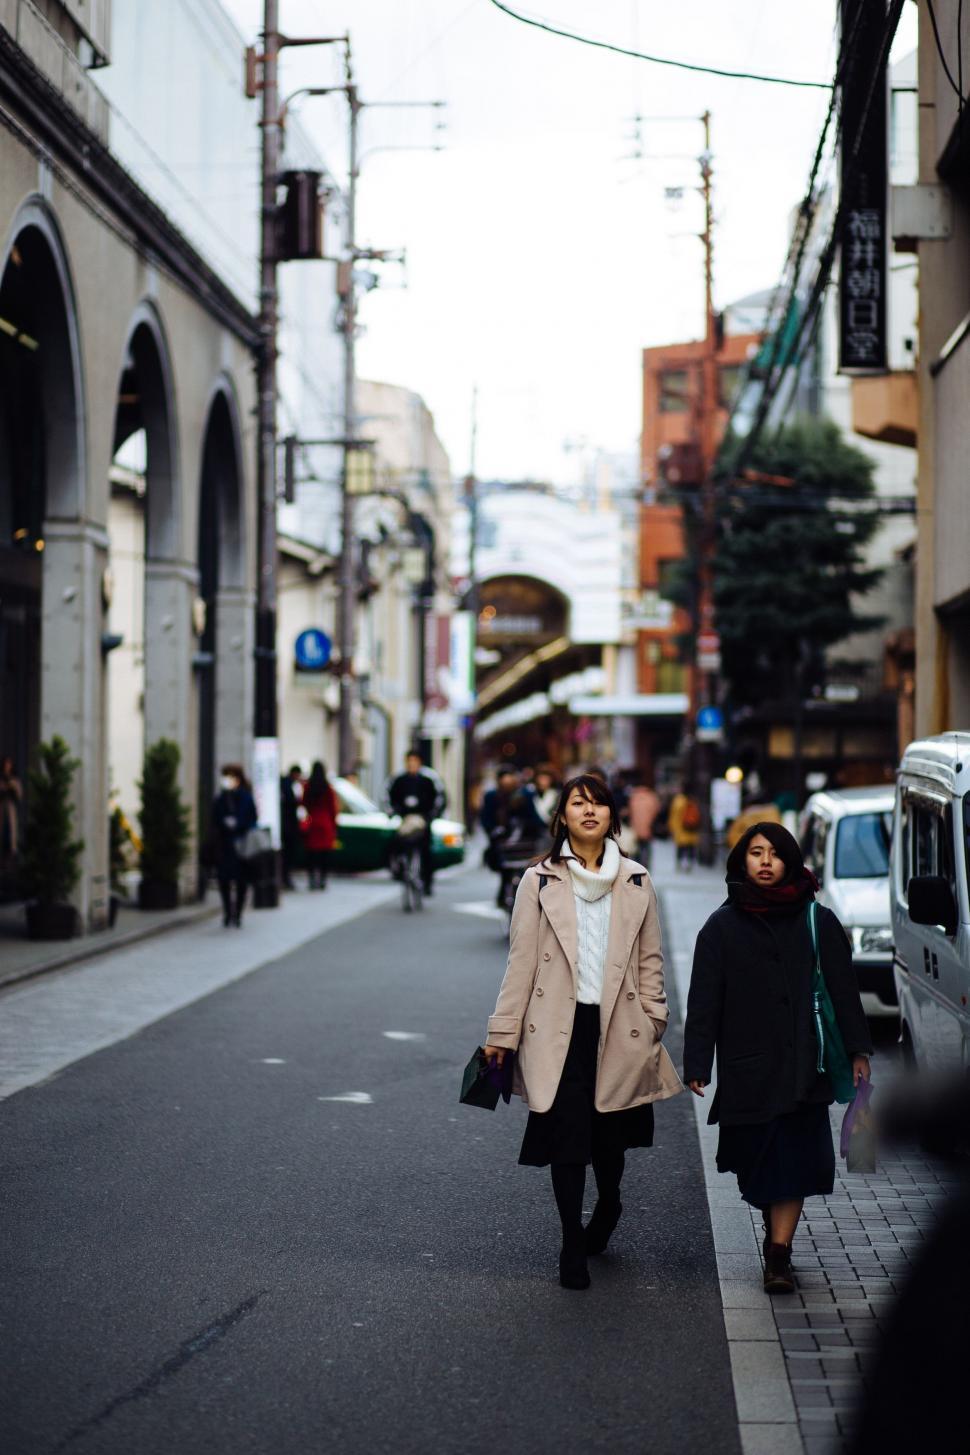 Free Image of Two Women Walking Down a City Street 